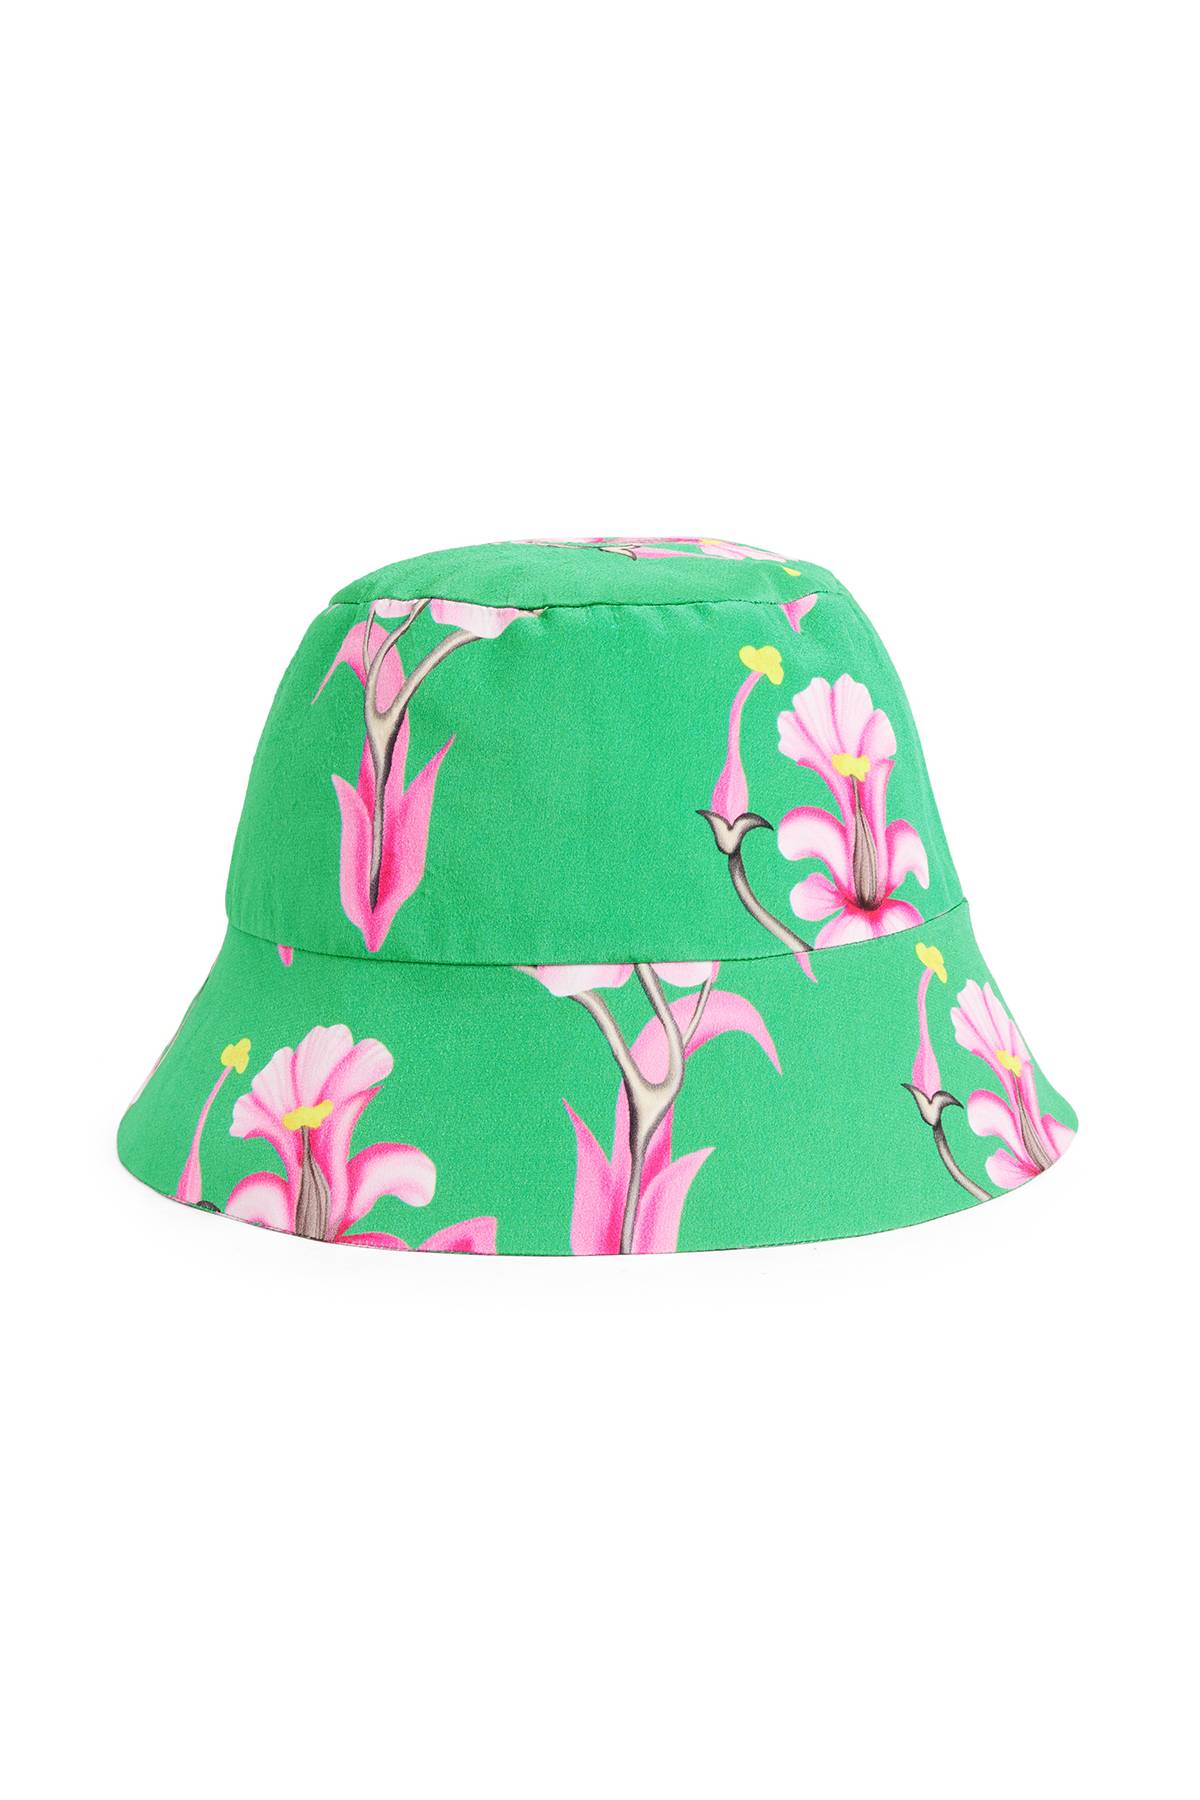 Mint Cherry Blossom Bucket Hat